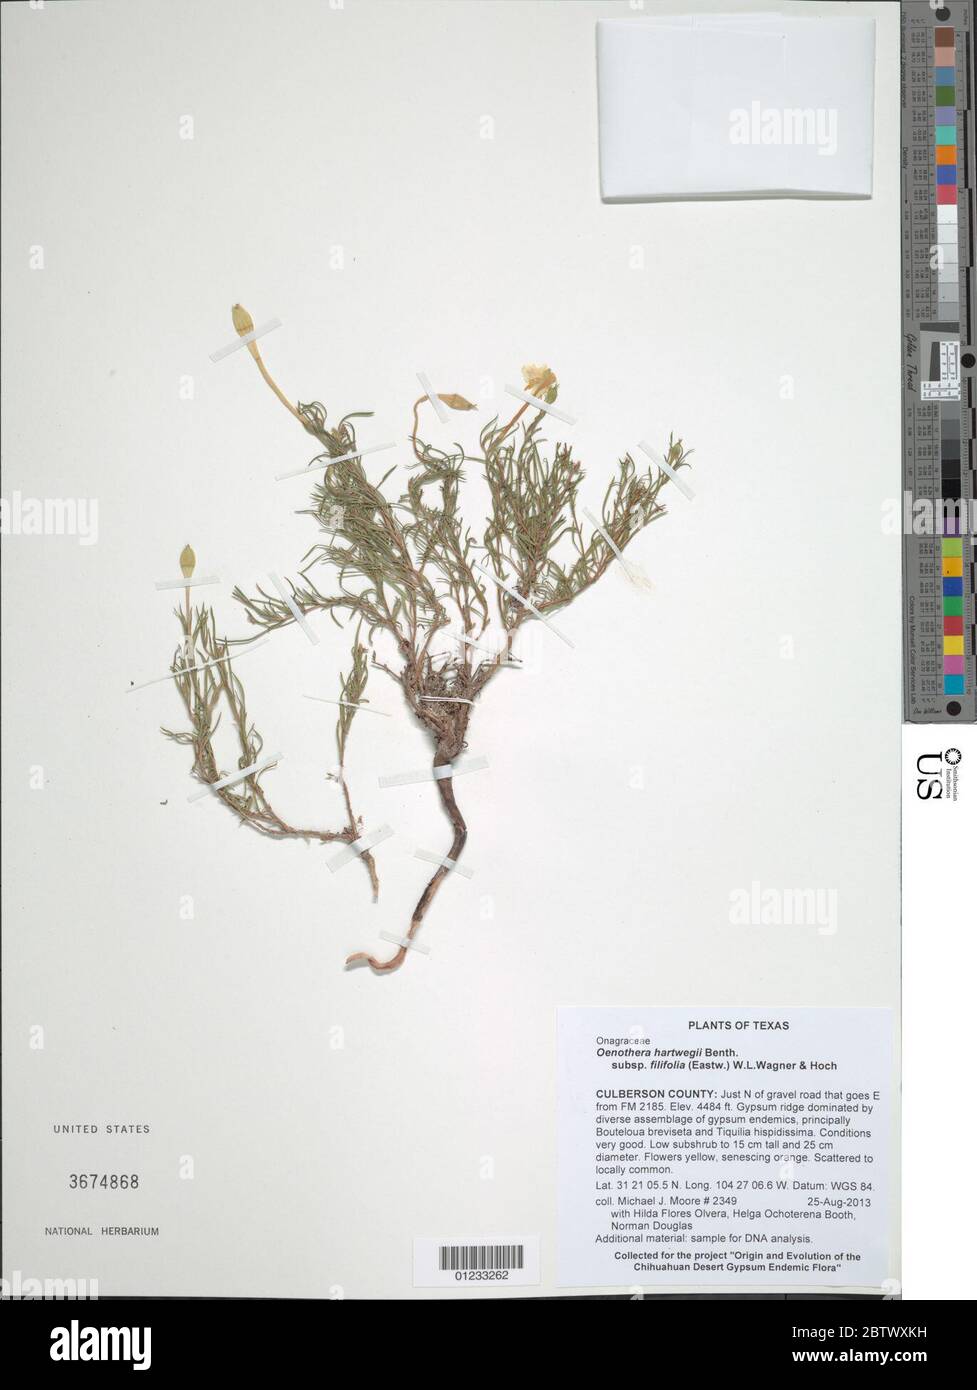 Oenothera hartwegii subsp filifolia Eastw WL Wagner Hoch. Stock Photo